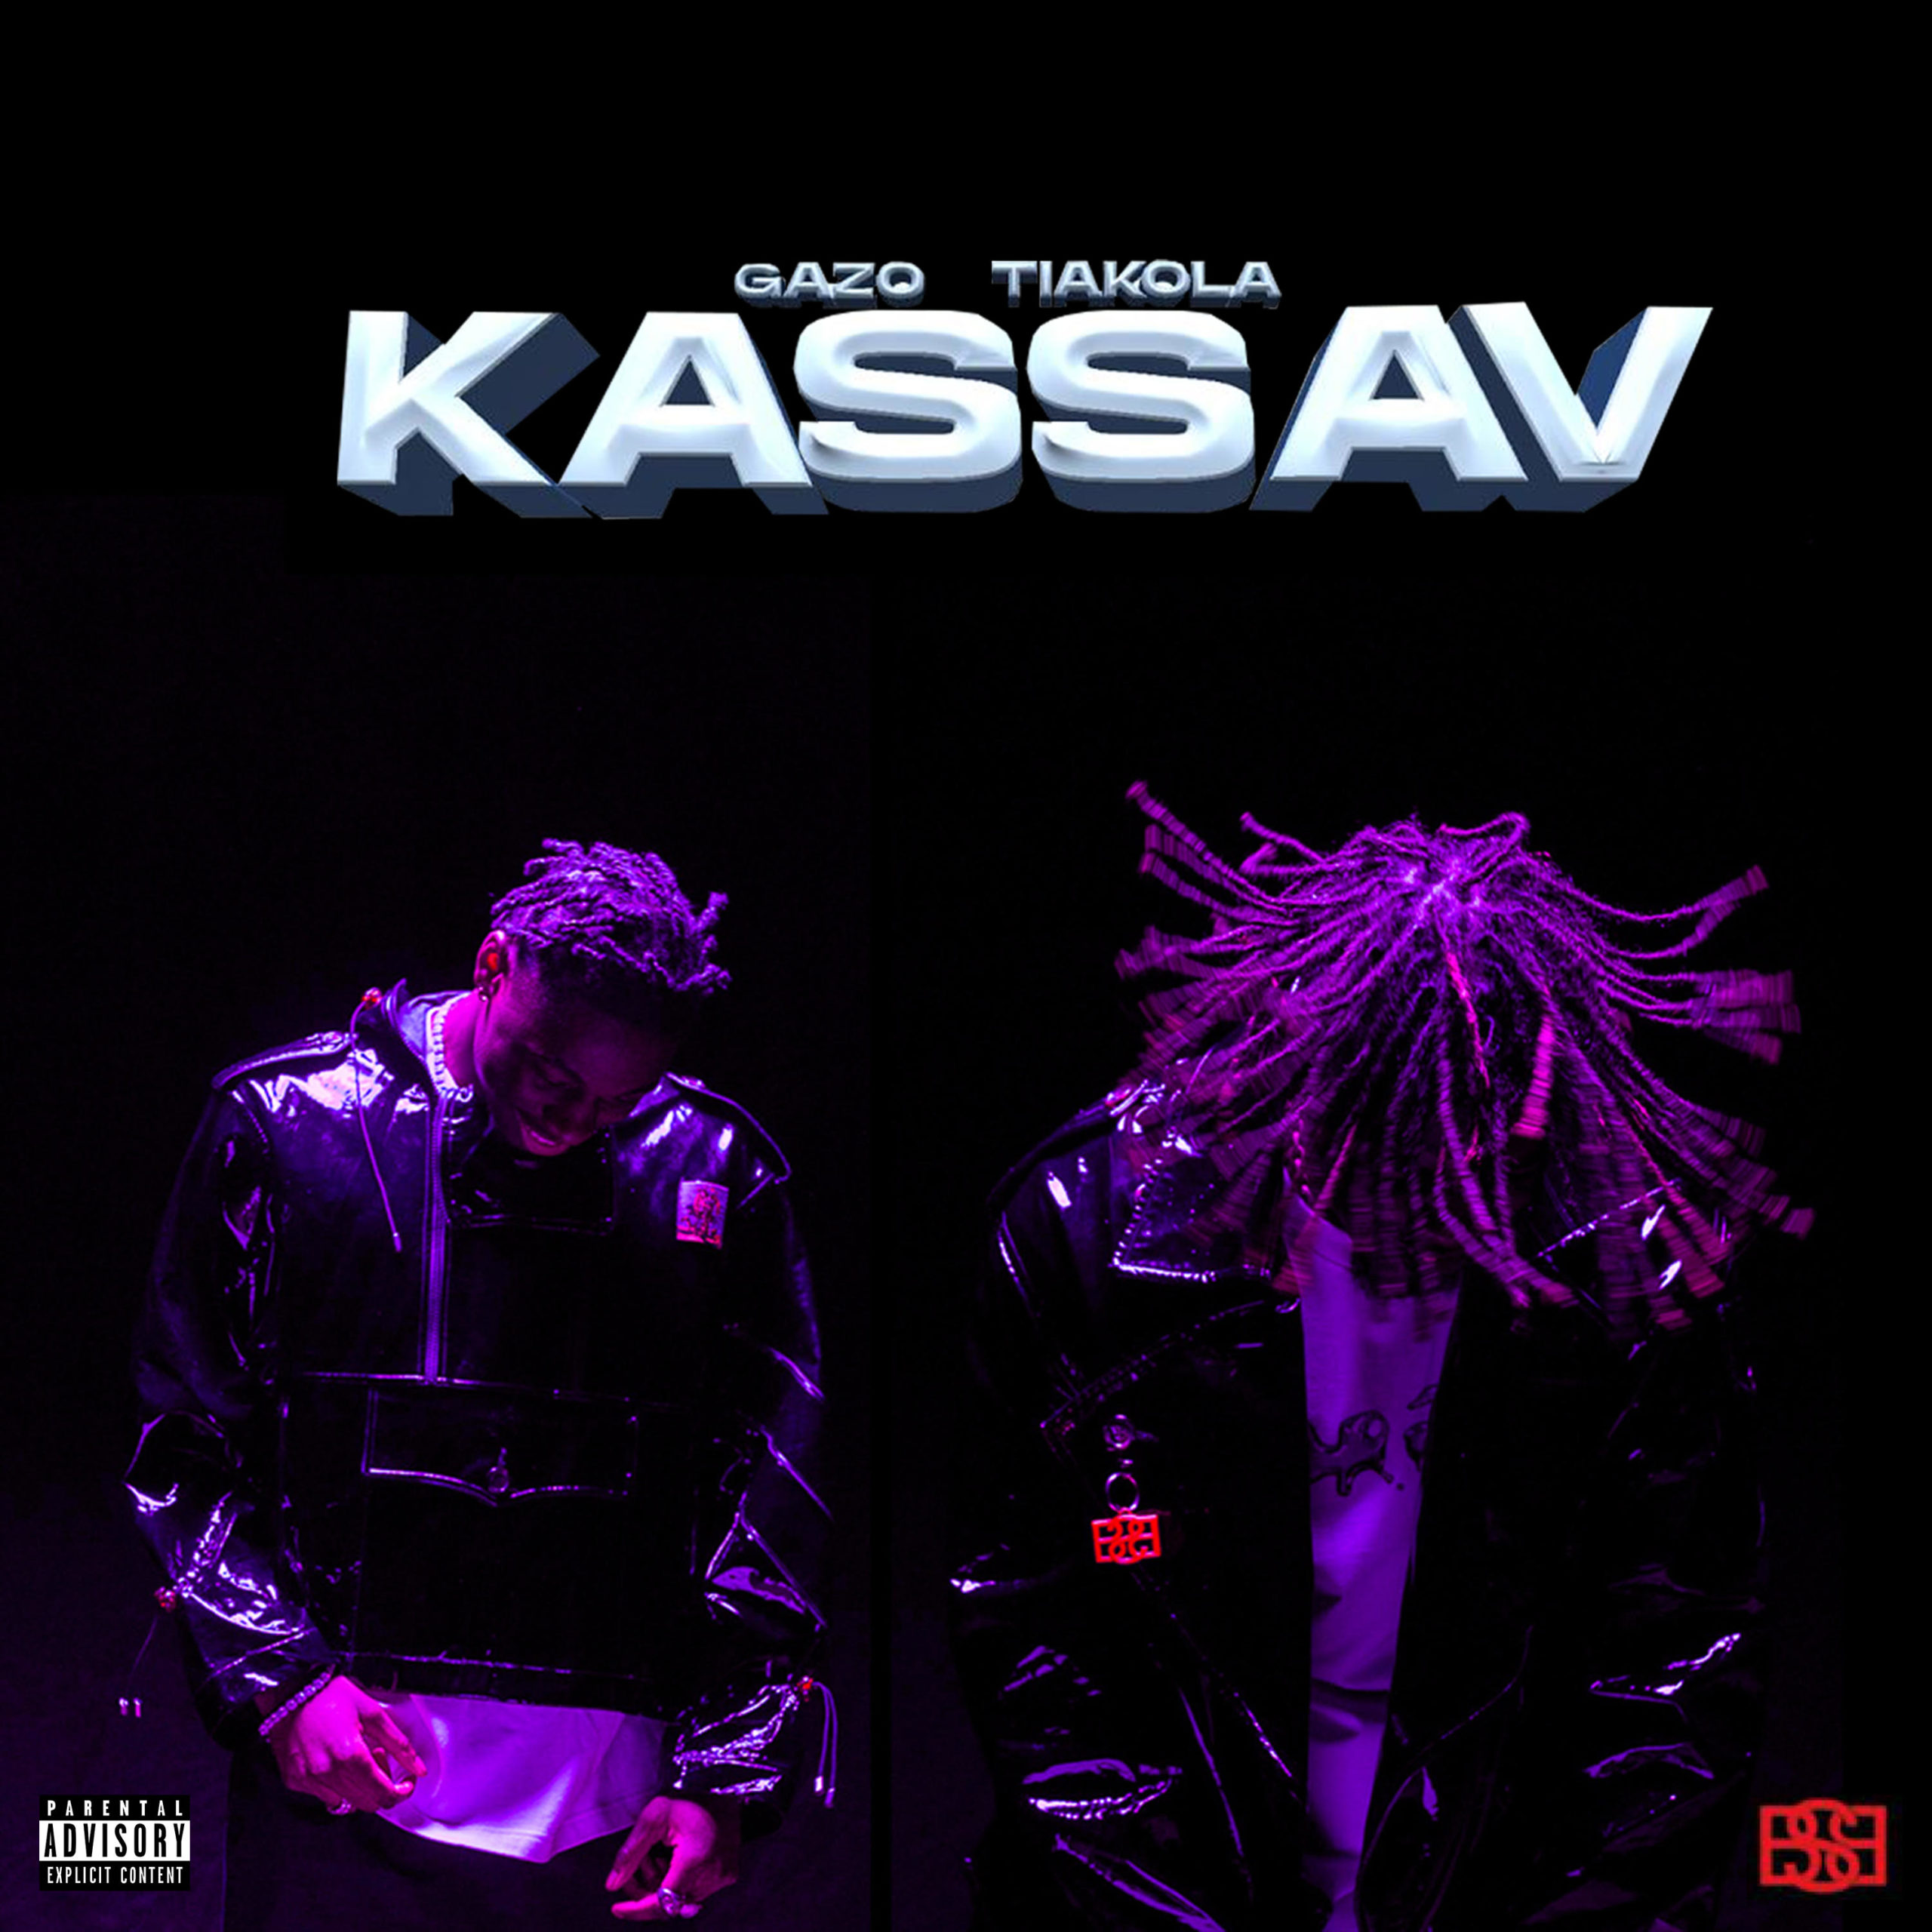 Gazo - KASSAV (feat. Tiakola) 2021 album complet cover